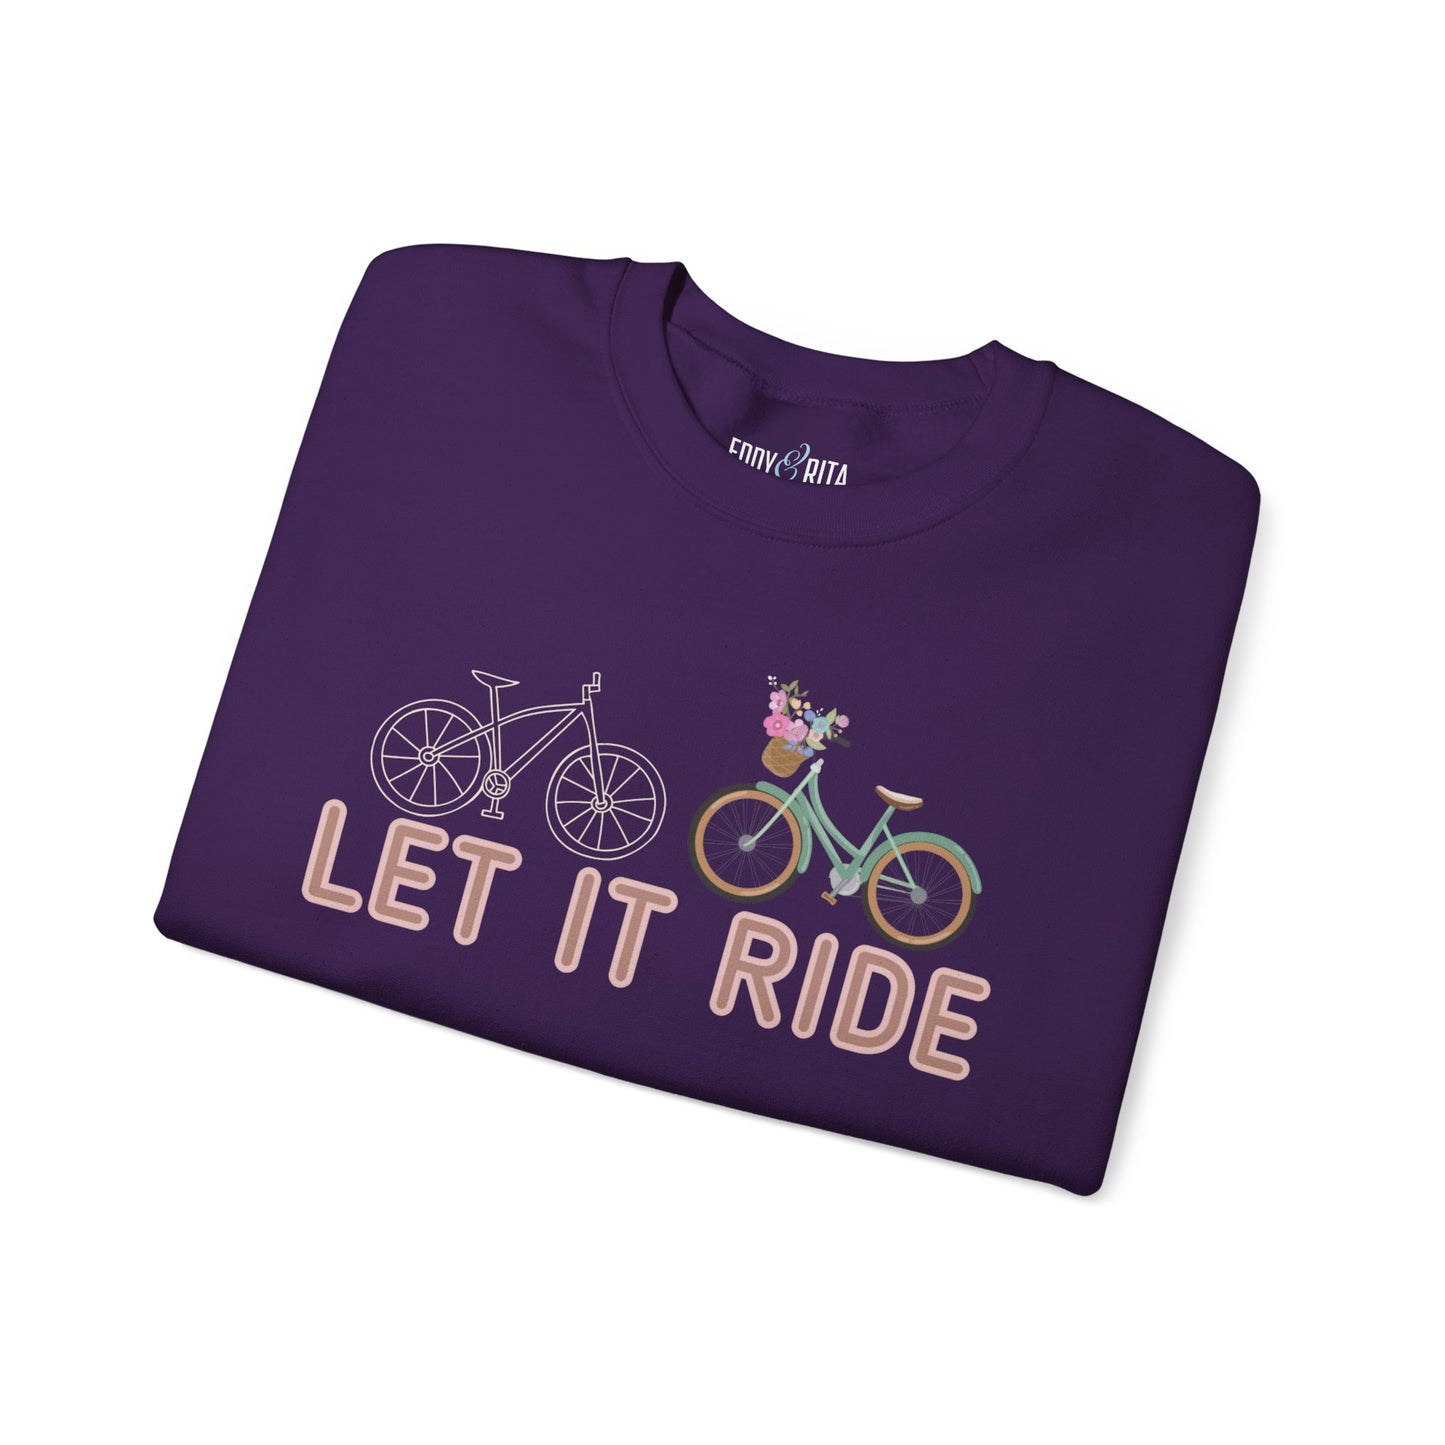 Let It Ride Women's Sweatshirt: Bicyclist's Motivation - Eddy and Rita